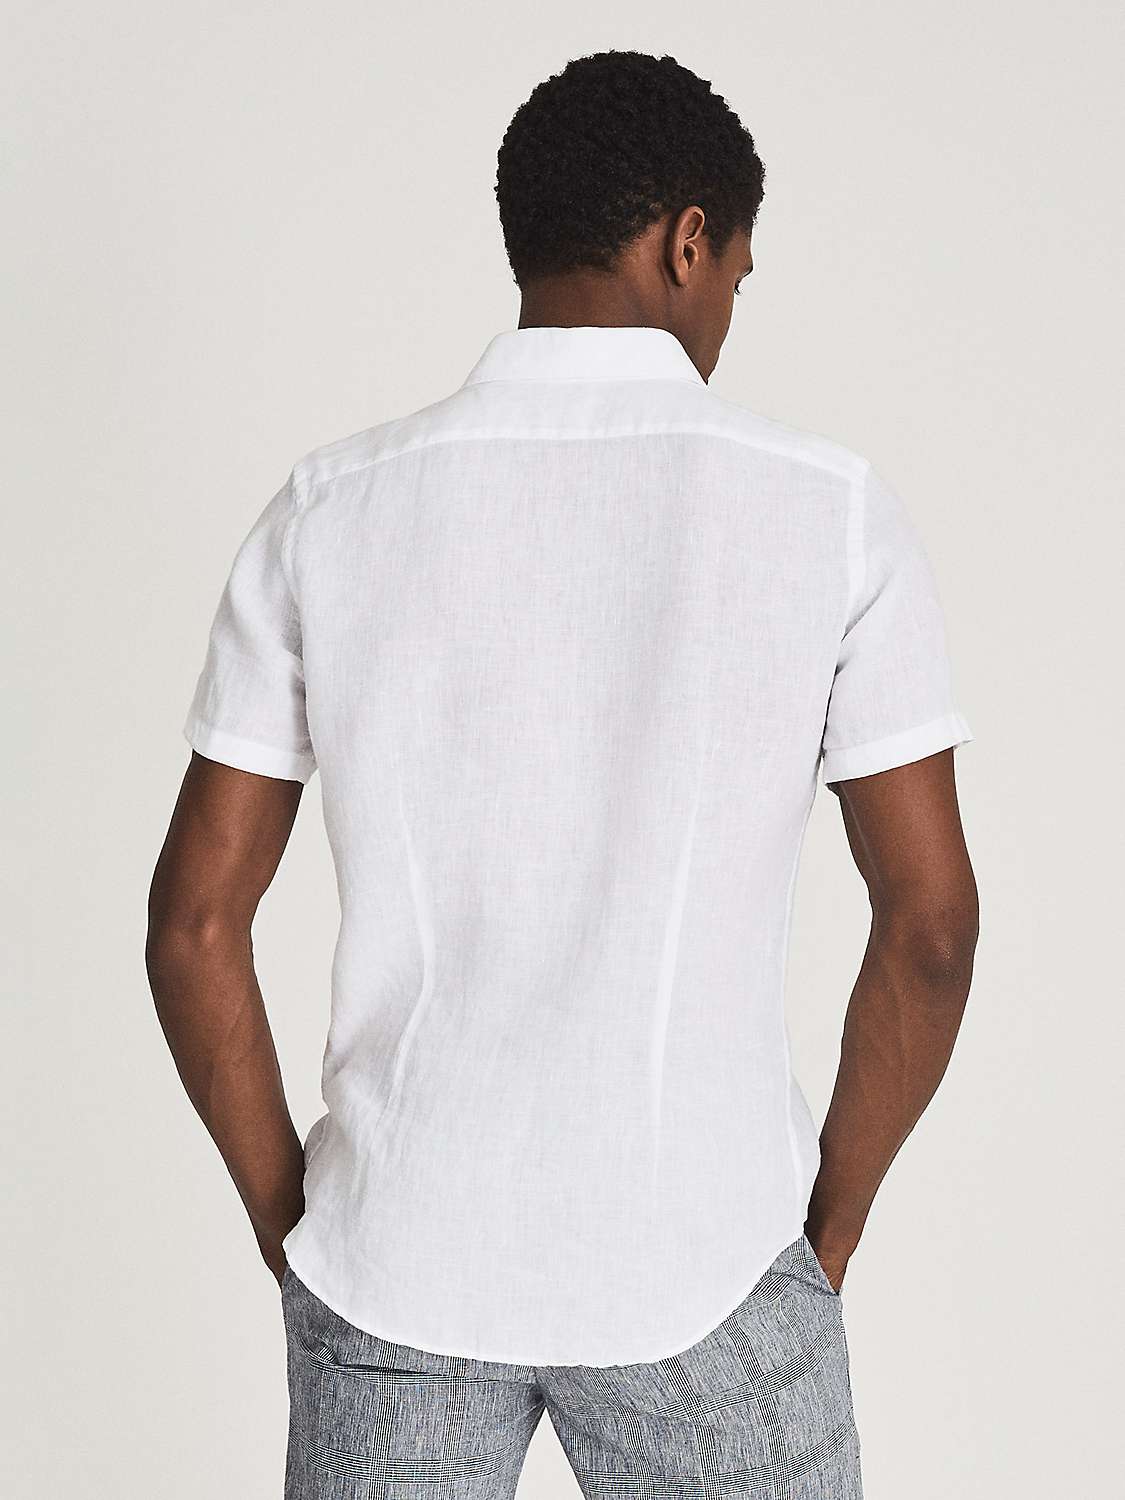 Reiss Holiday Linen Regular Fit Shirt, White at John Lewis & Partners